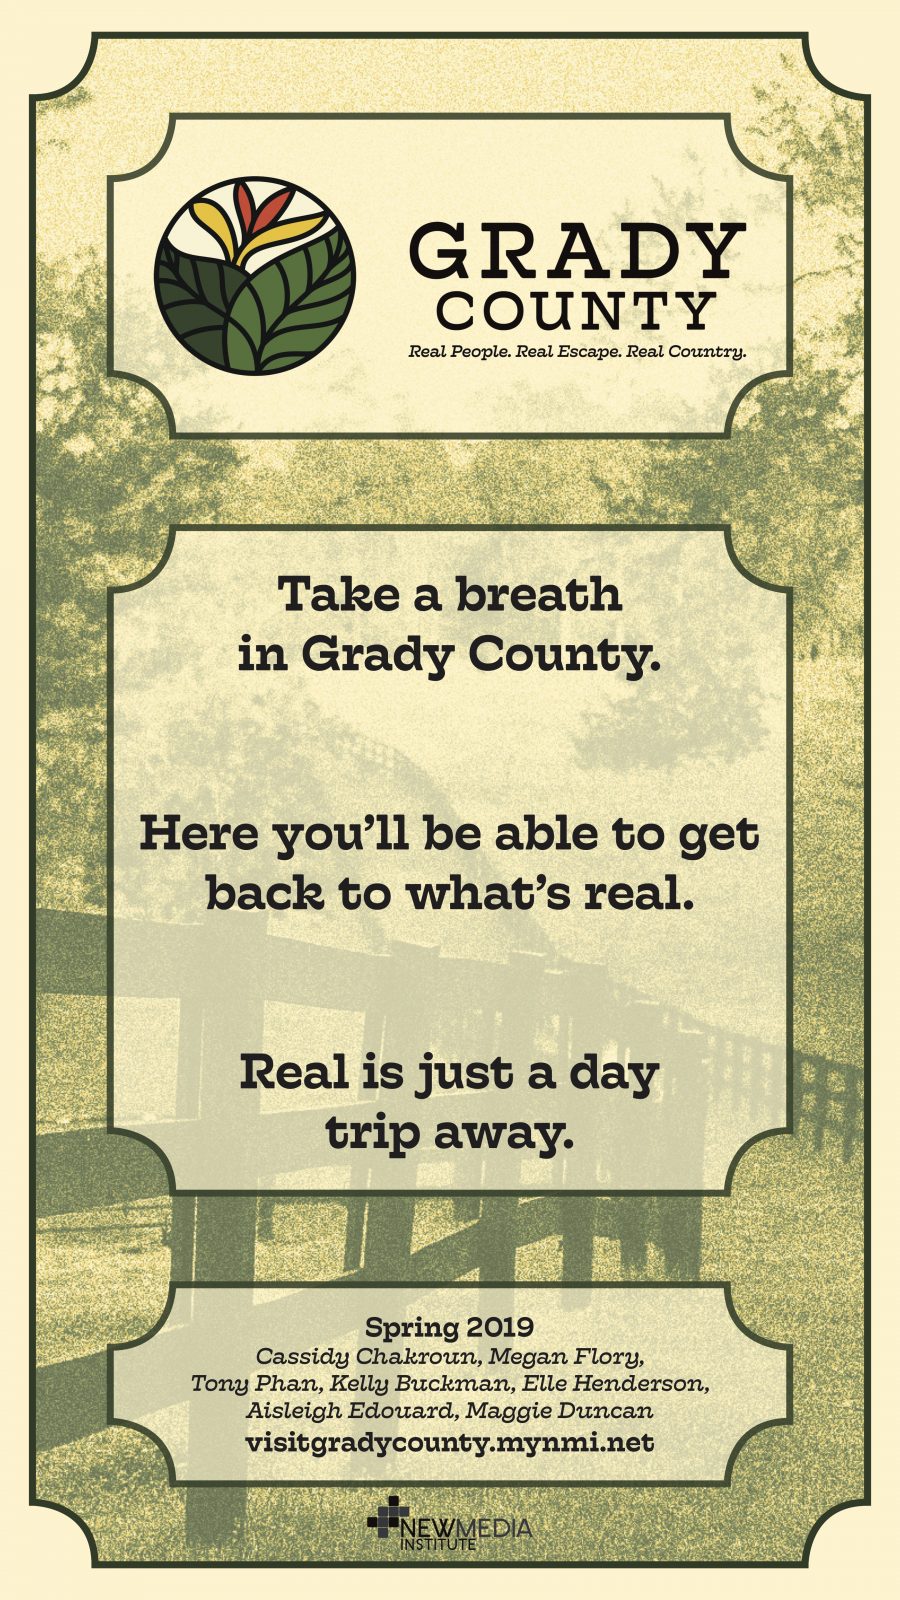 Grady County